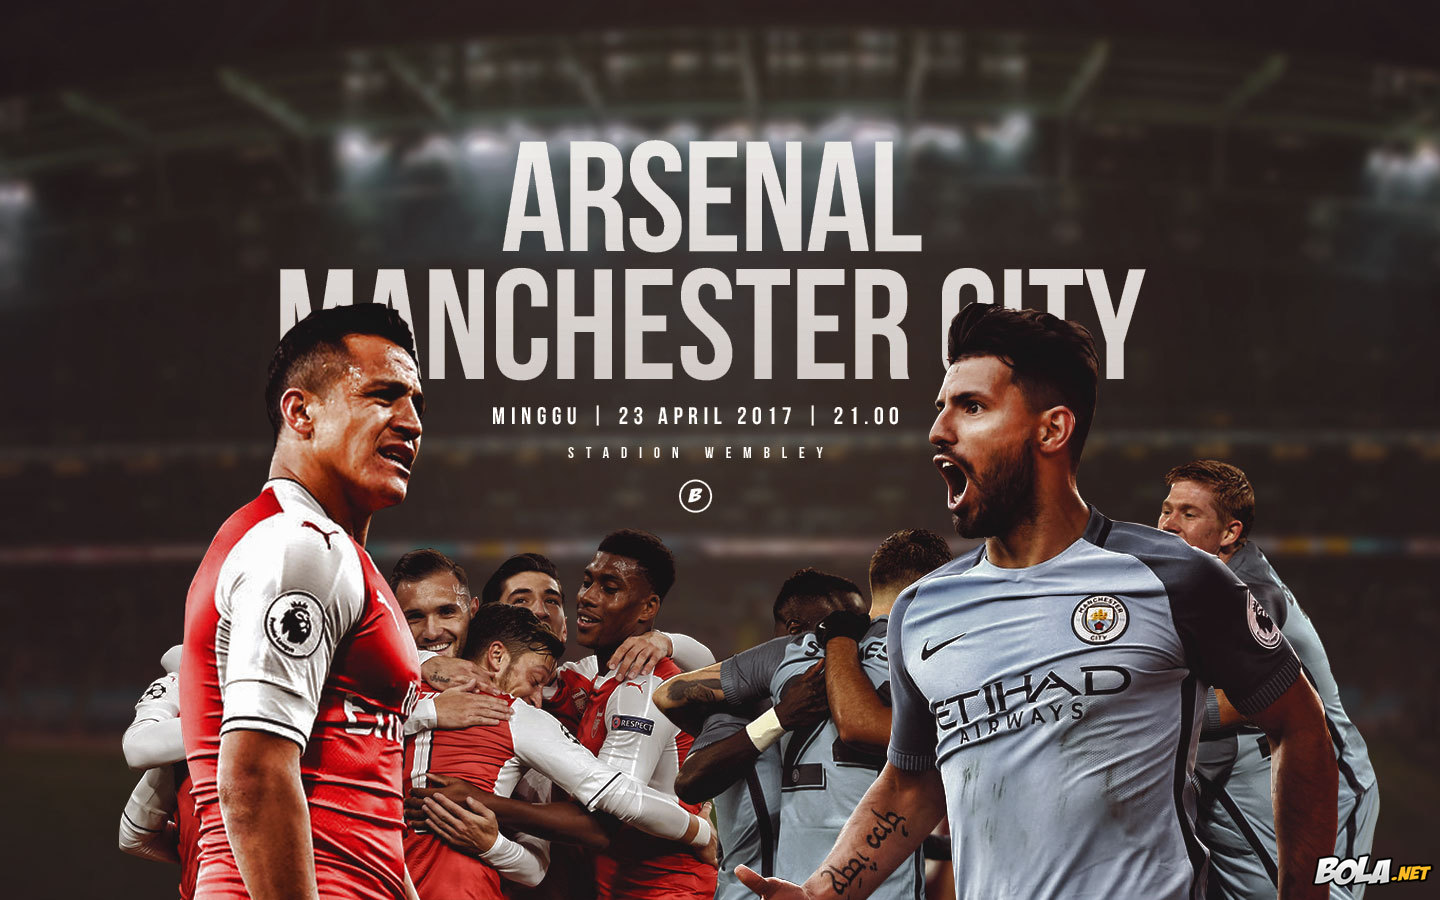 Deskripsi : Wallpaper Arsenal Vs Manchester City, size: 1440x900